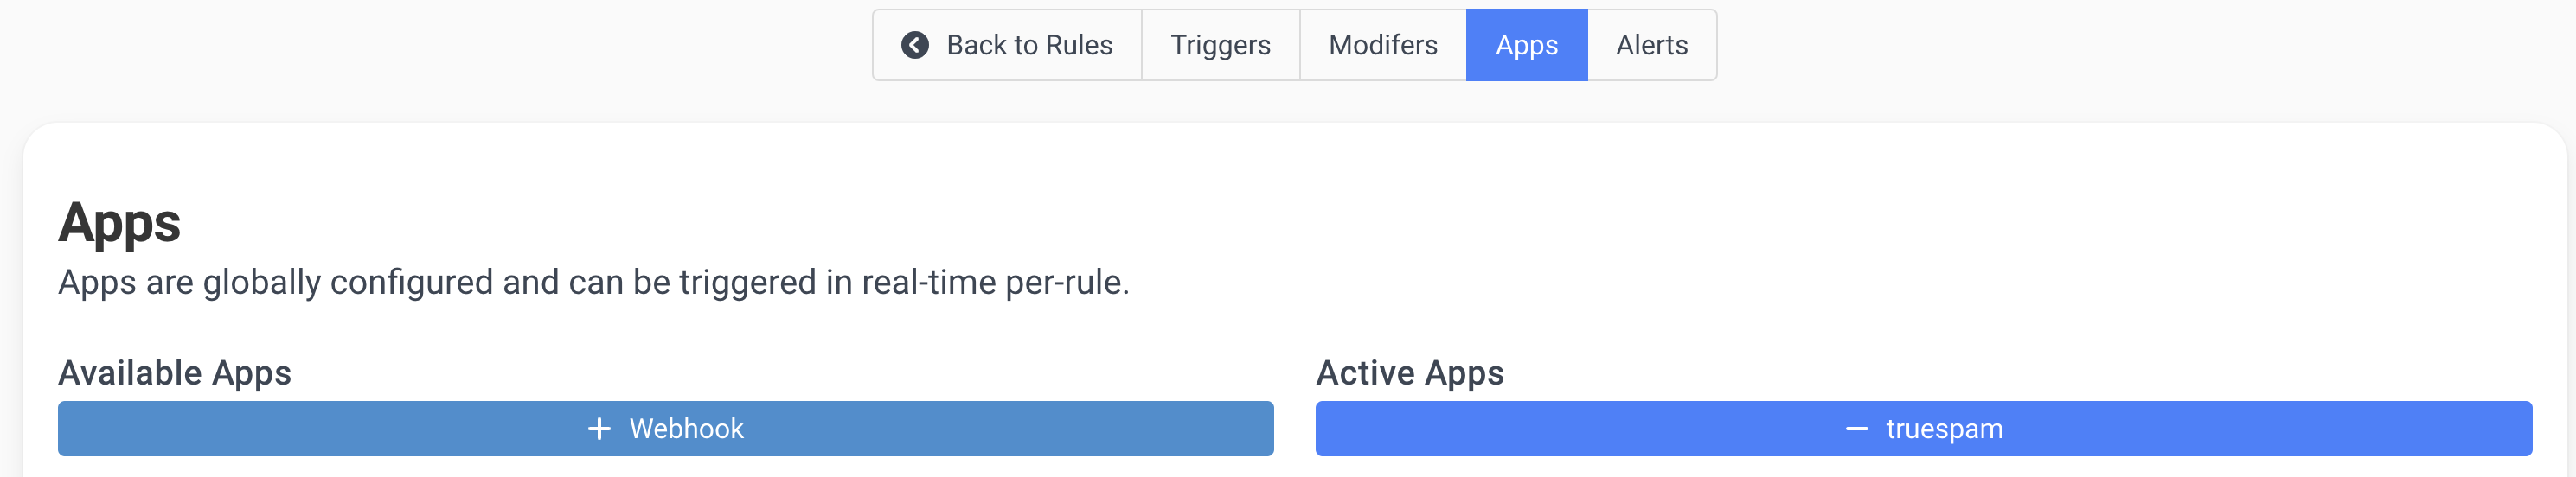 AScreenshot showing how to add TrueSpam to a rule